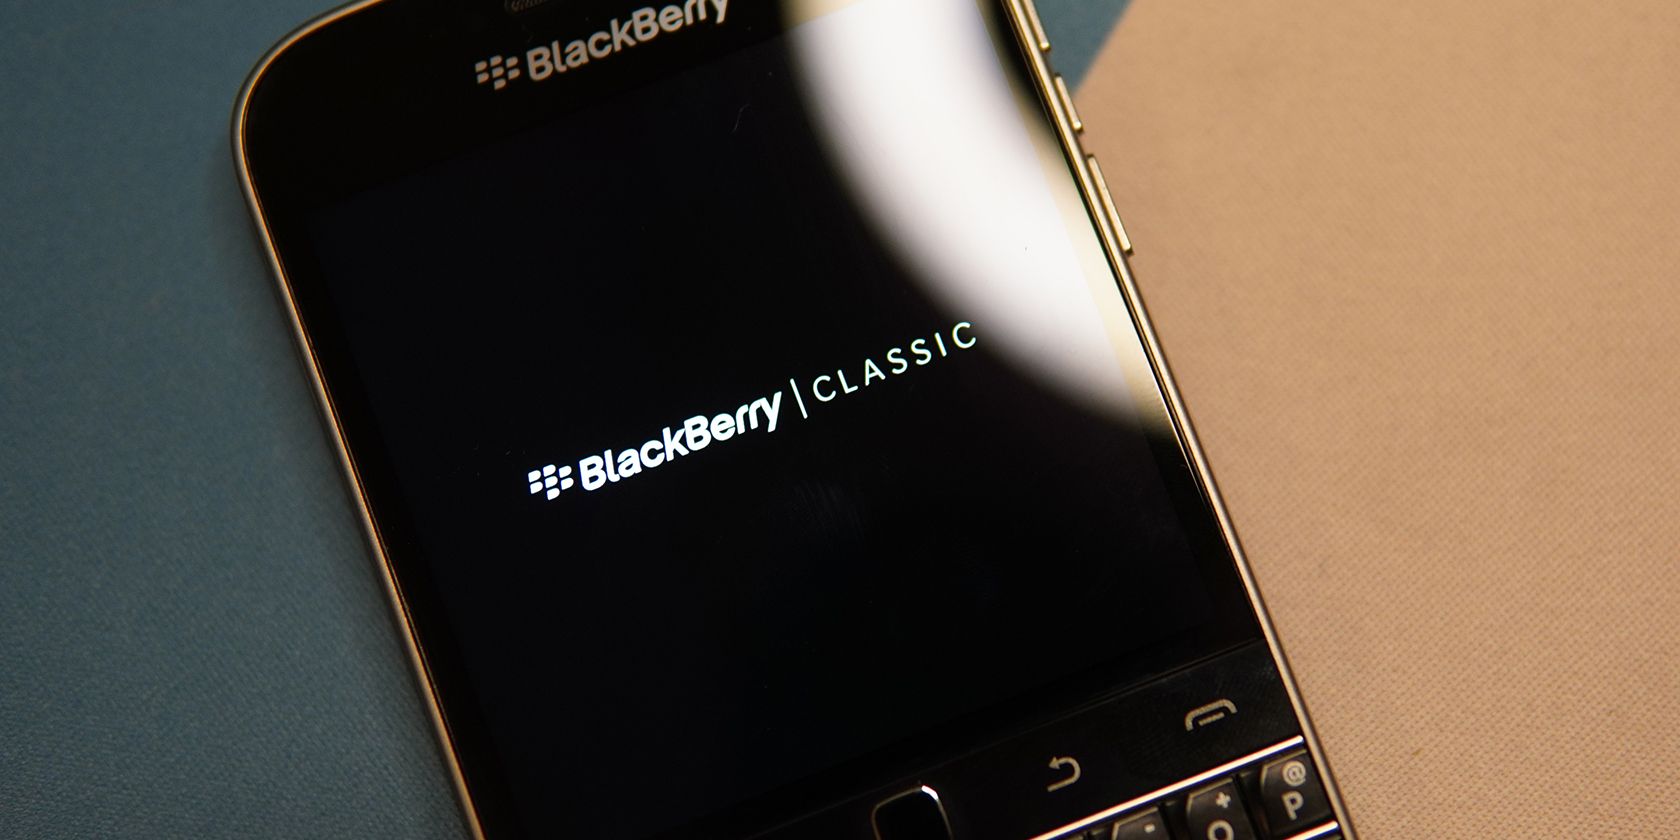 blackberry desktop manager does not detect device